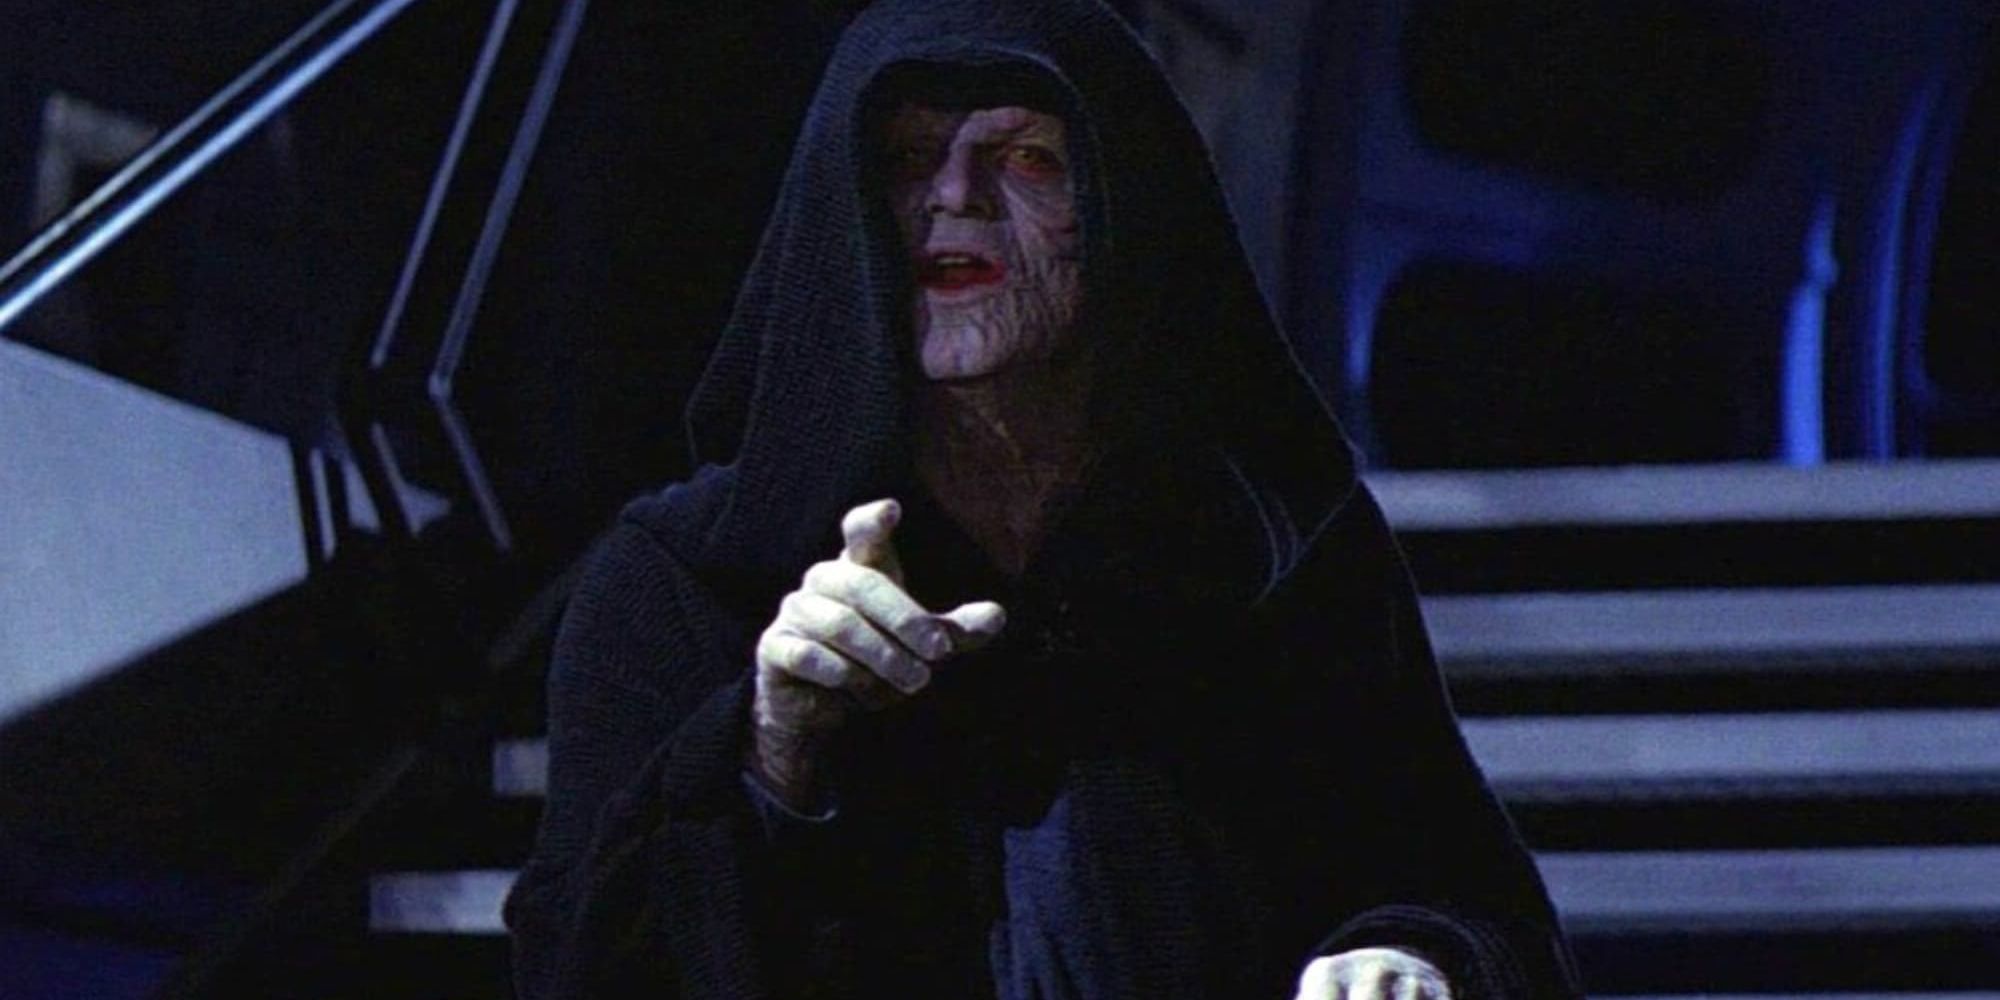 Palpatine (Ian McDiarmid) tempts Luke Skywalker (Mark Hamill) to the dark side